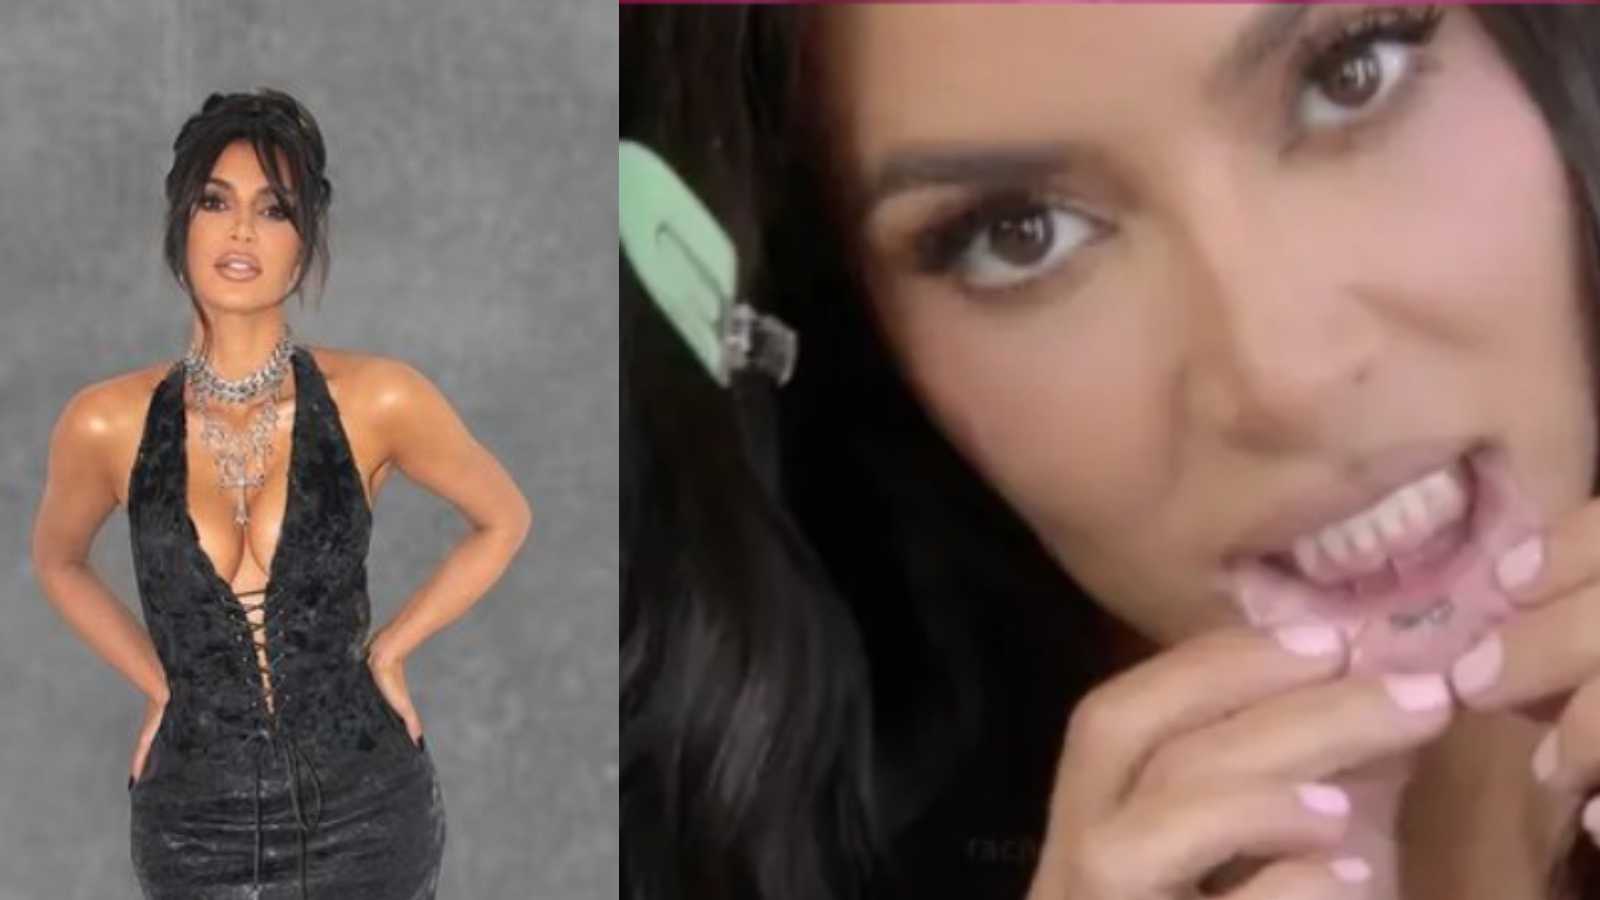 KIm Kardashian reveals her secret tattoo